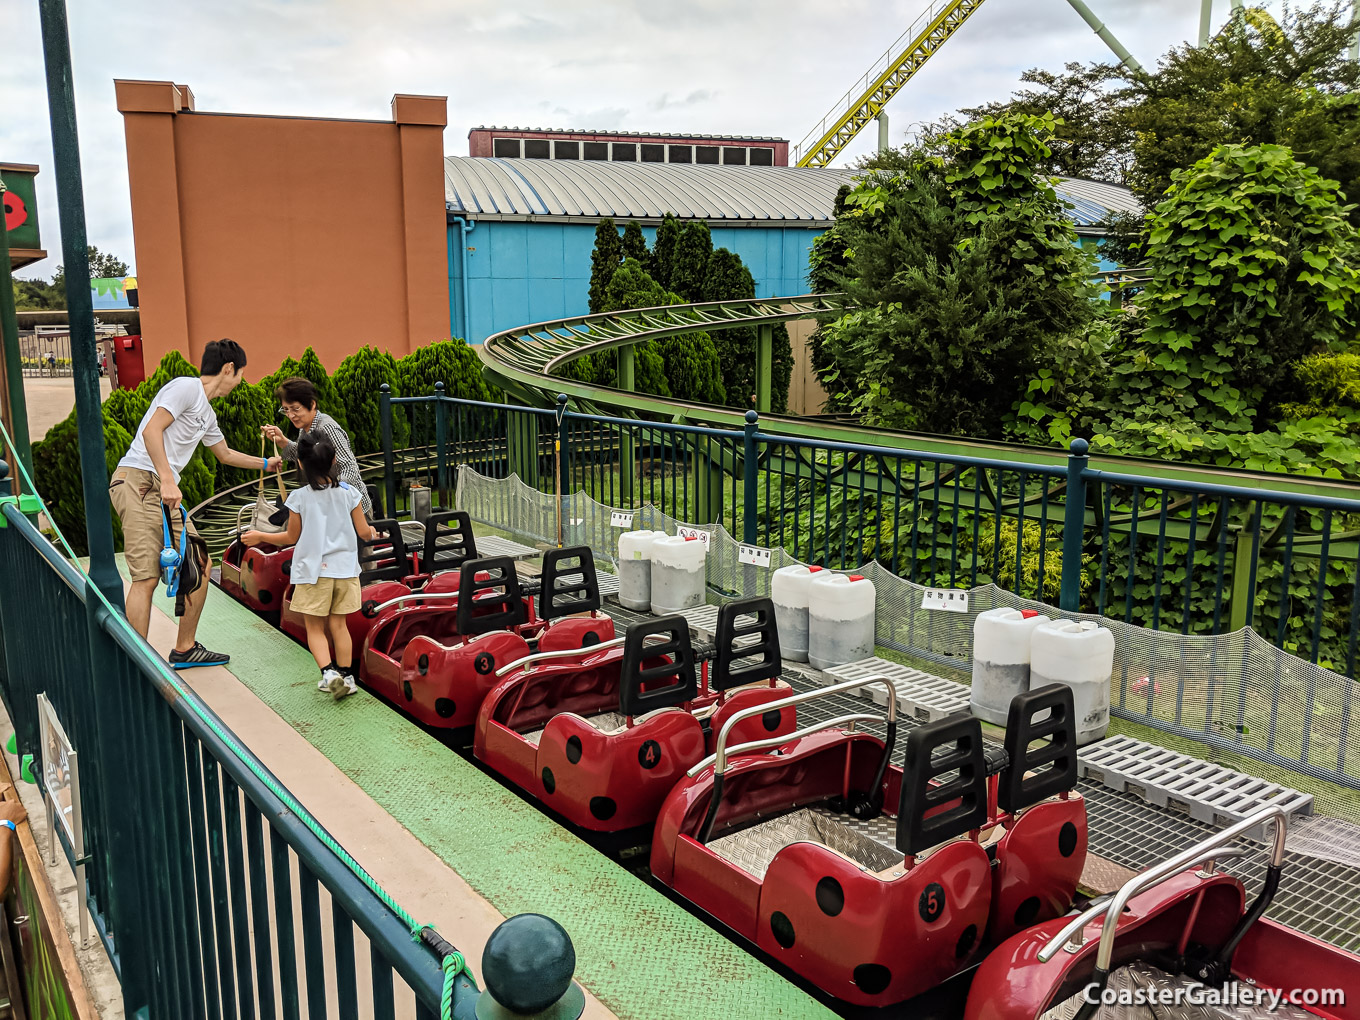 Tentomushi roller coaster at the Tobu Zoo in Japan